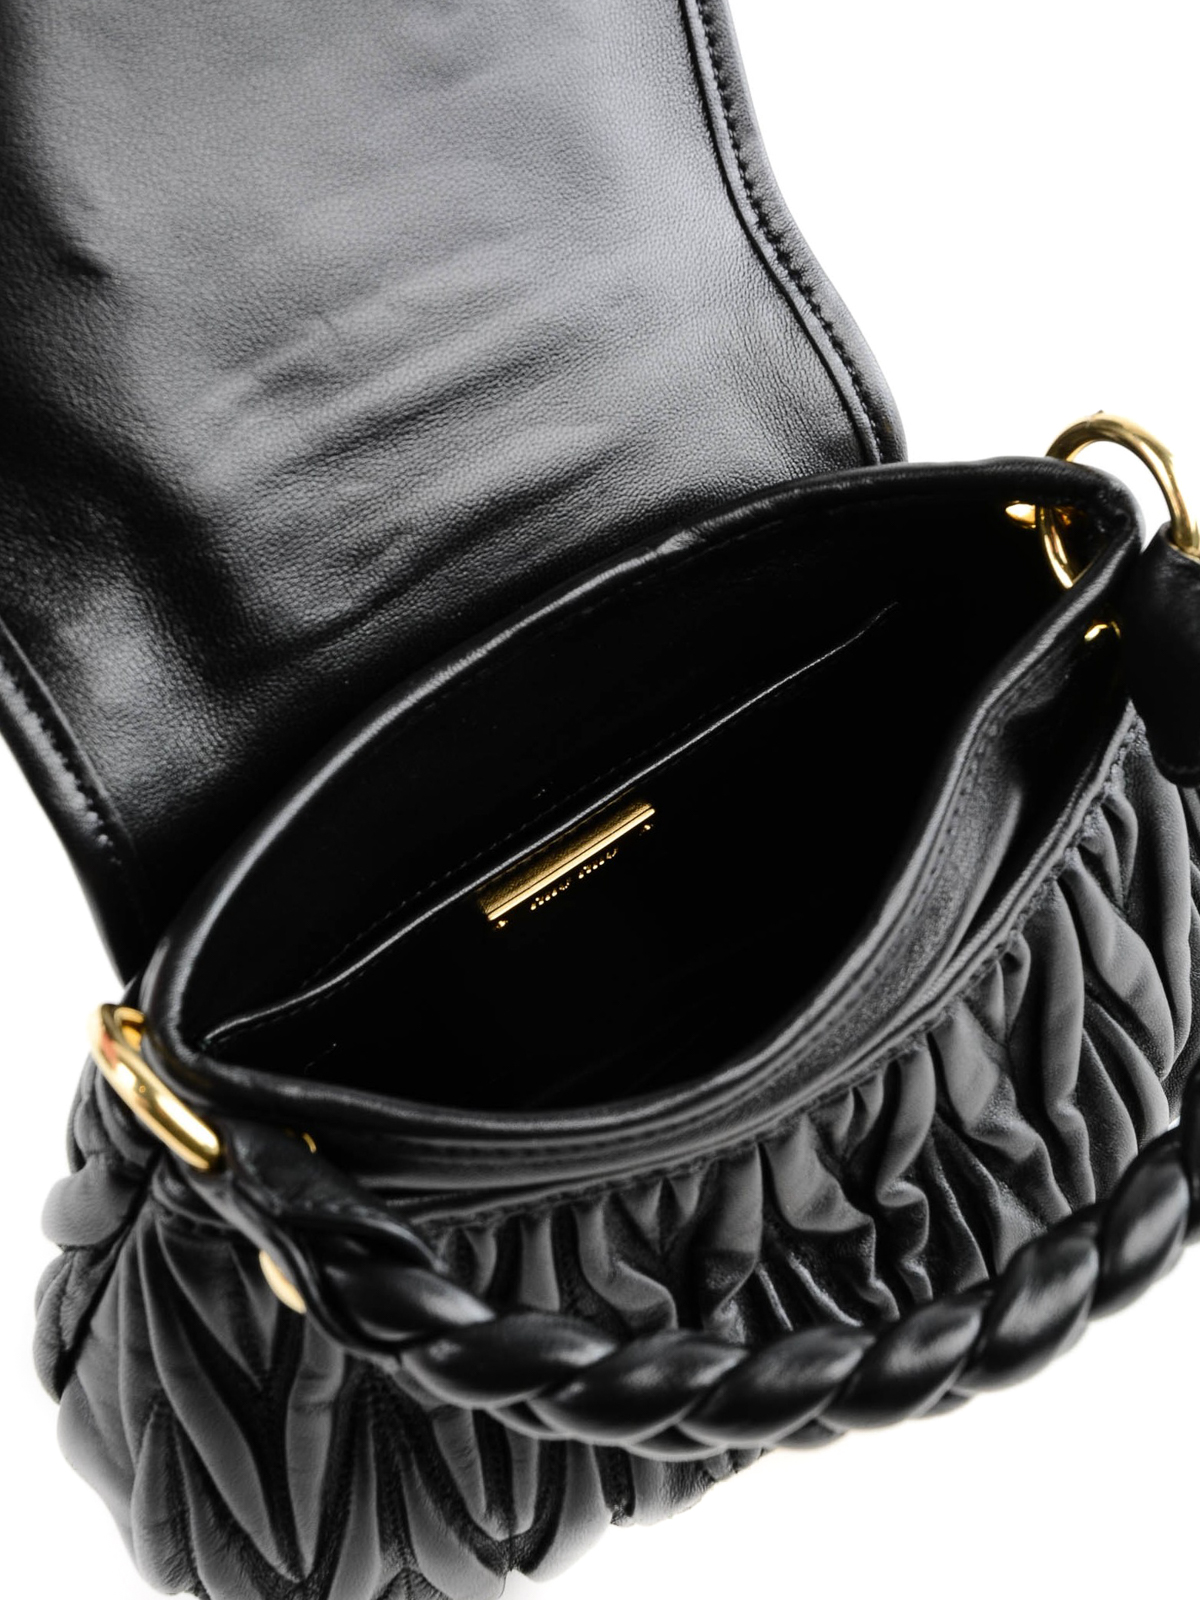 Shoulder bags Miu Miu - Coffer matelassé leather jewel handbag -  5BH111VOJON88002